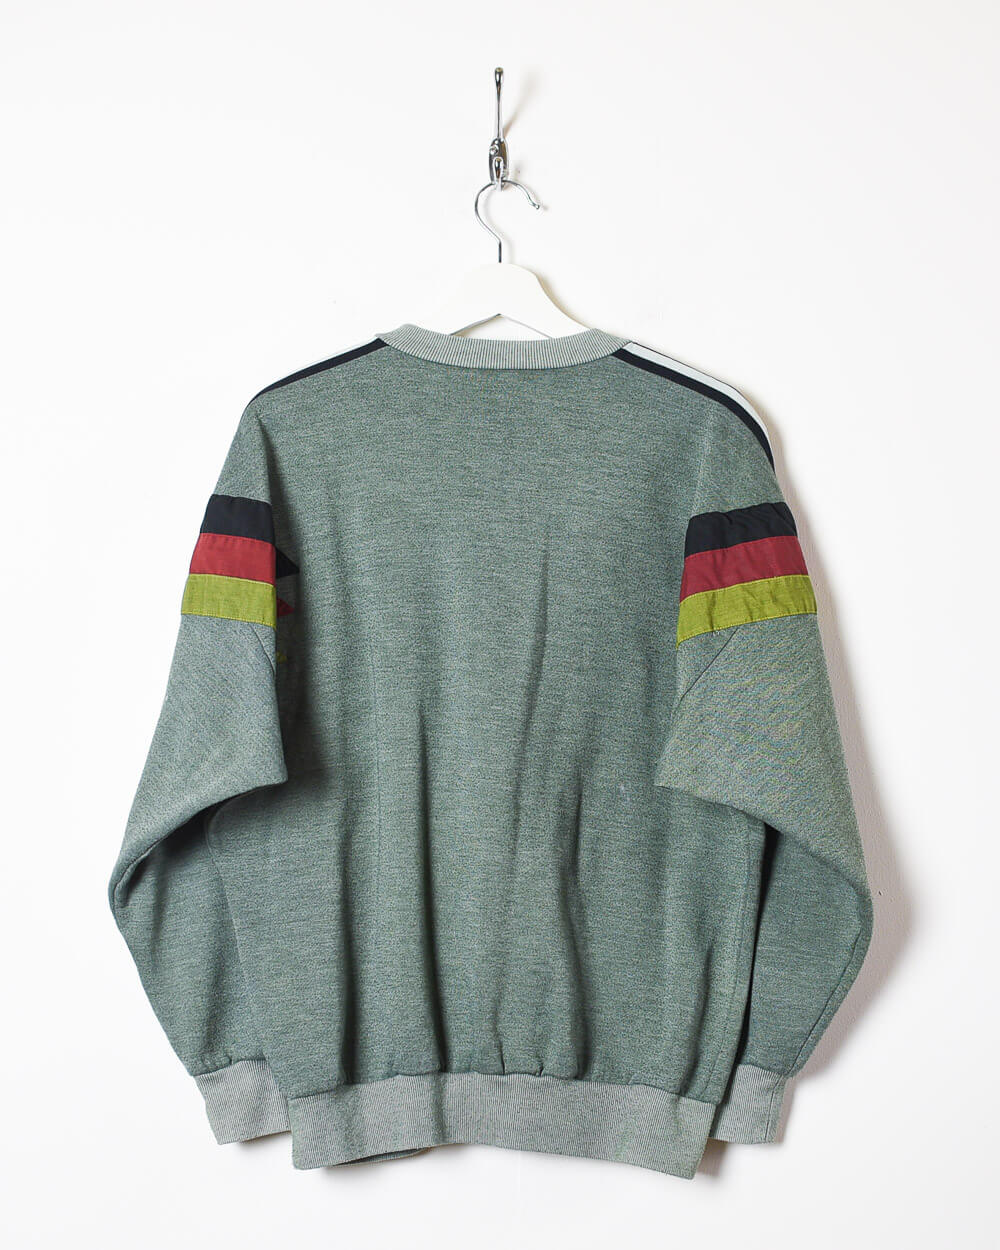 Green Adidas Germany 1990/92 Sweatshirt - Small